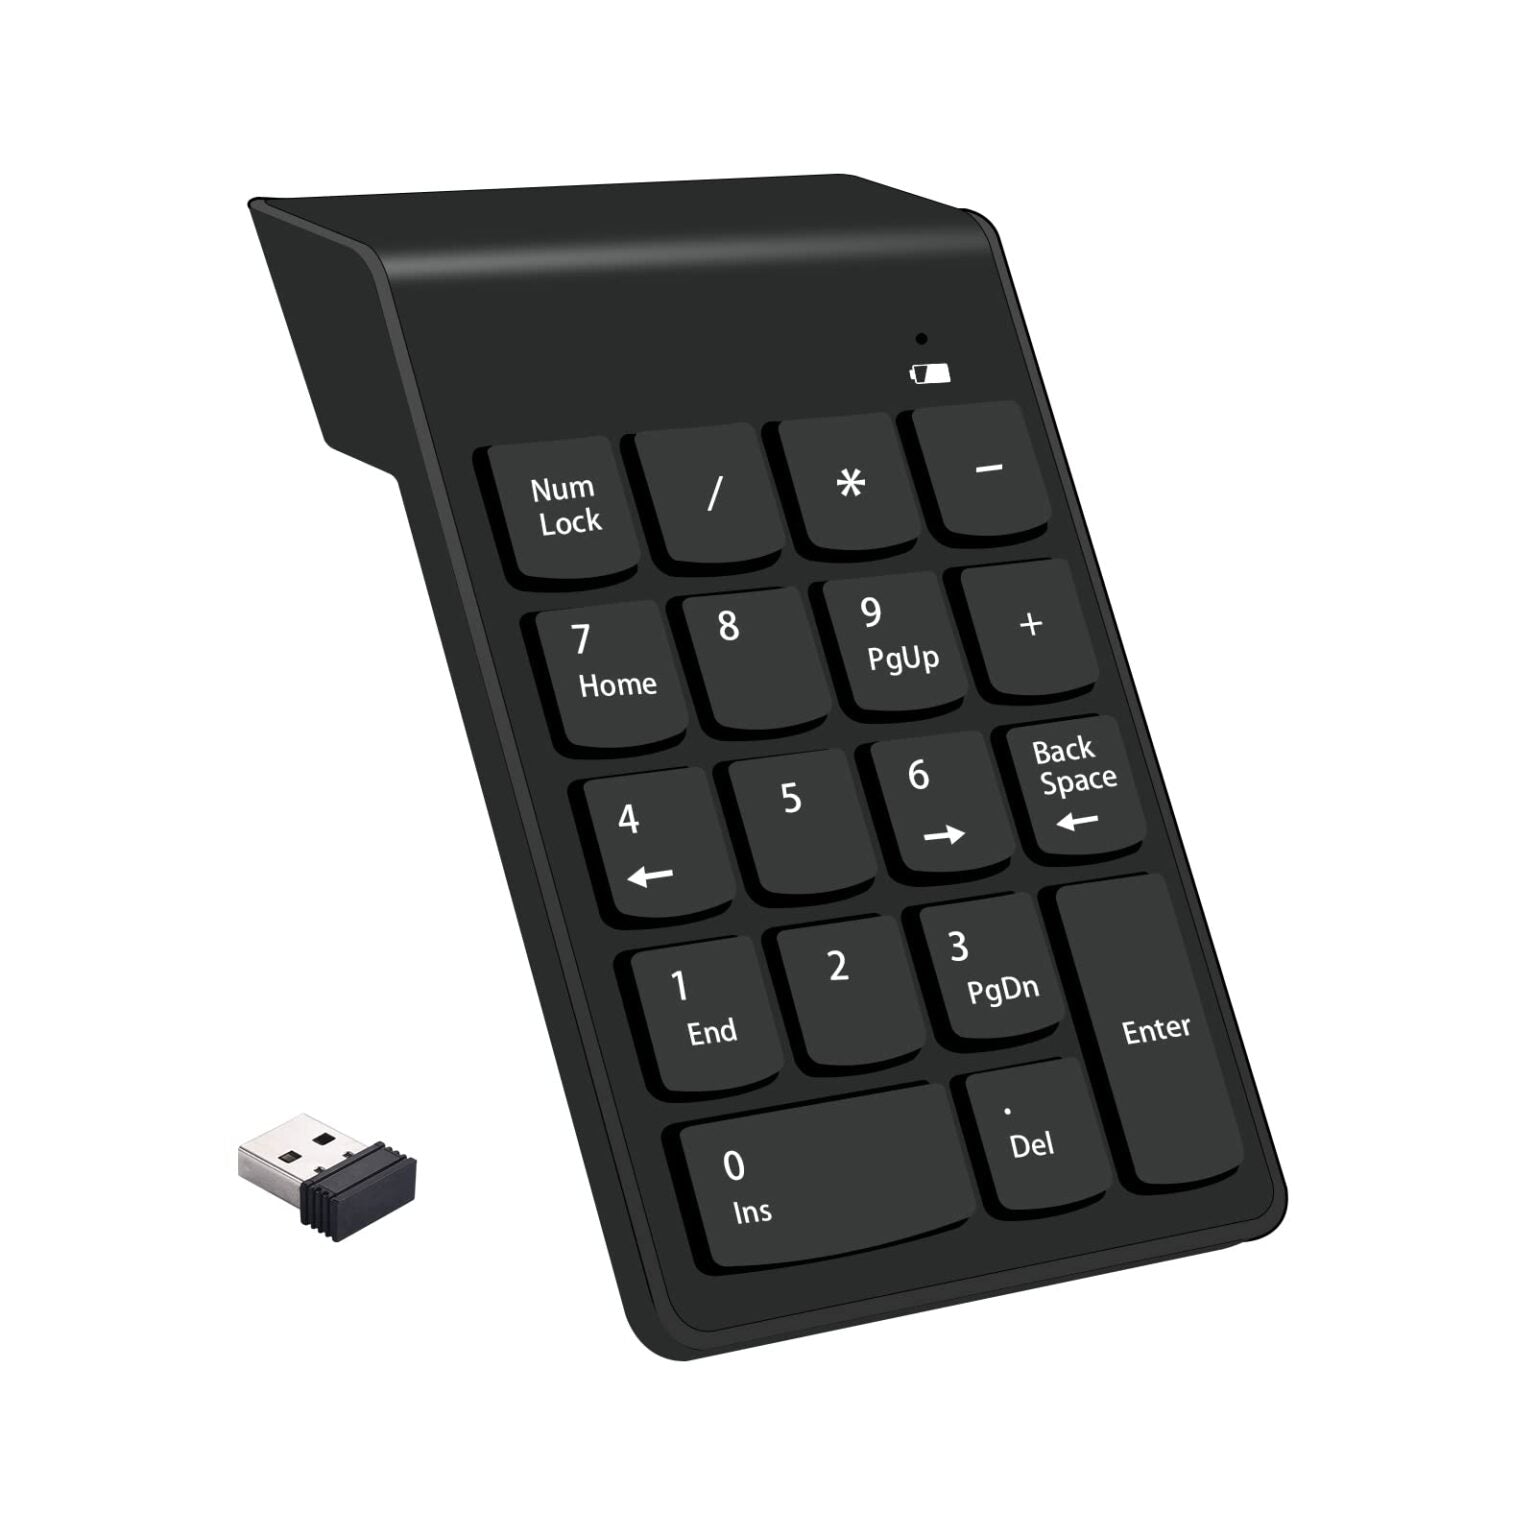 Wireless USB Numeric Keyboard